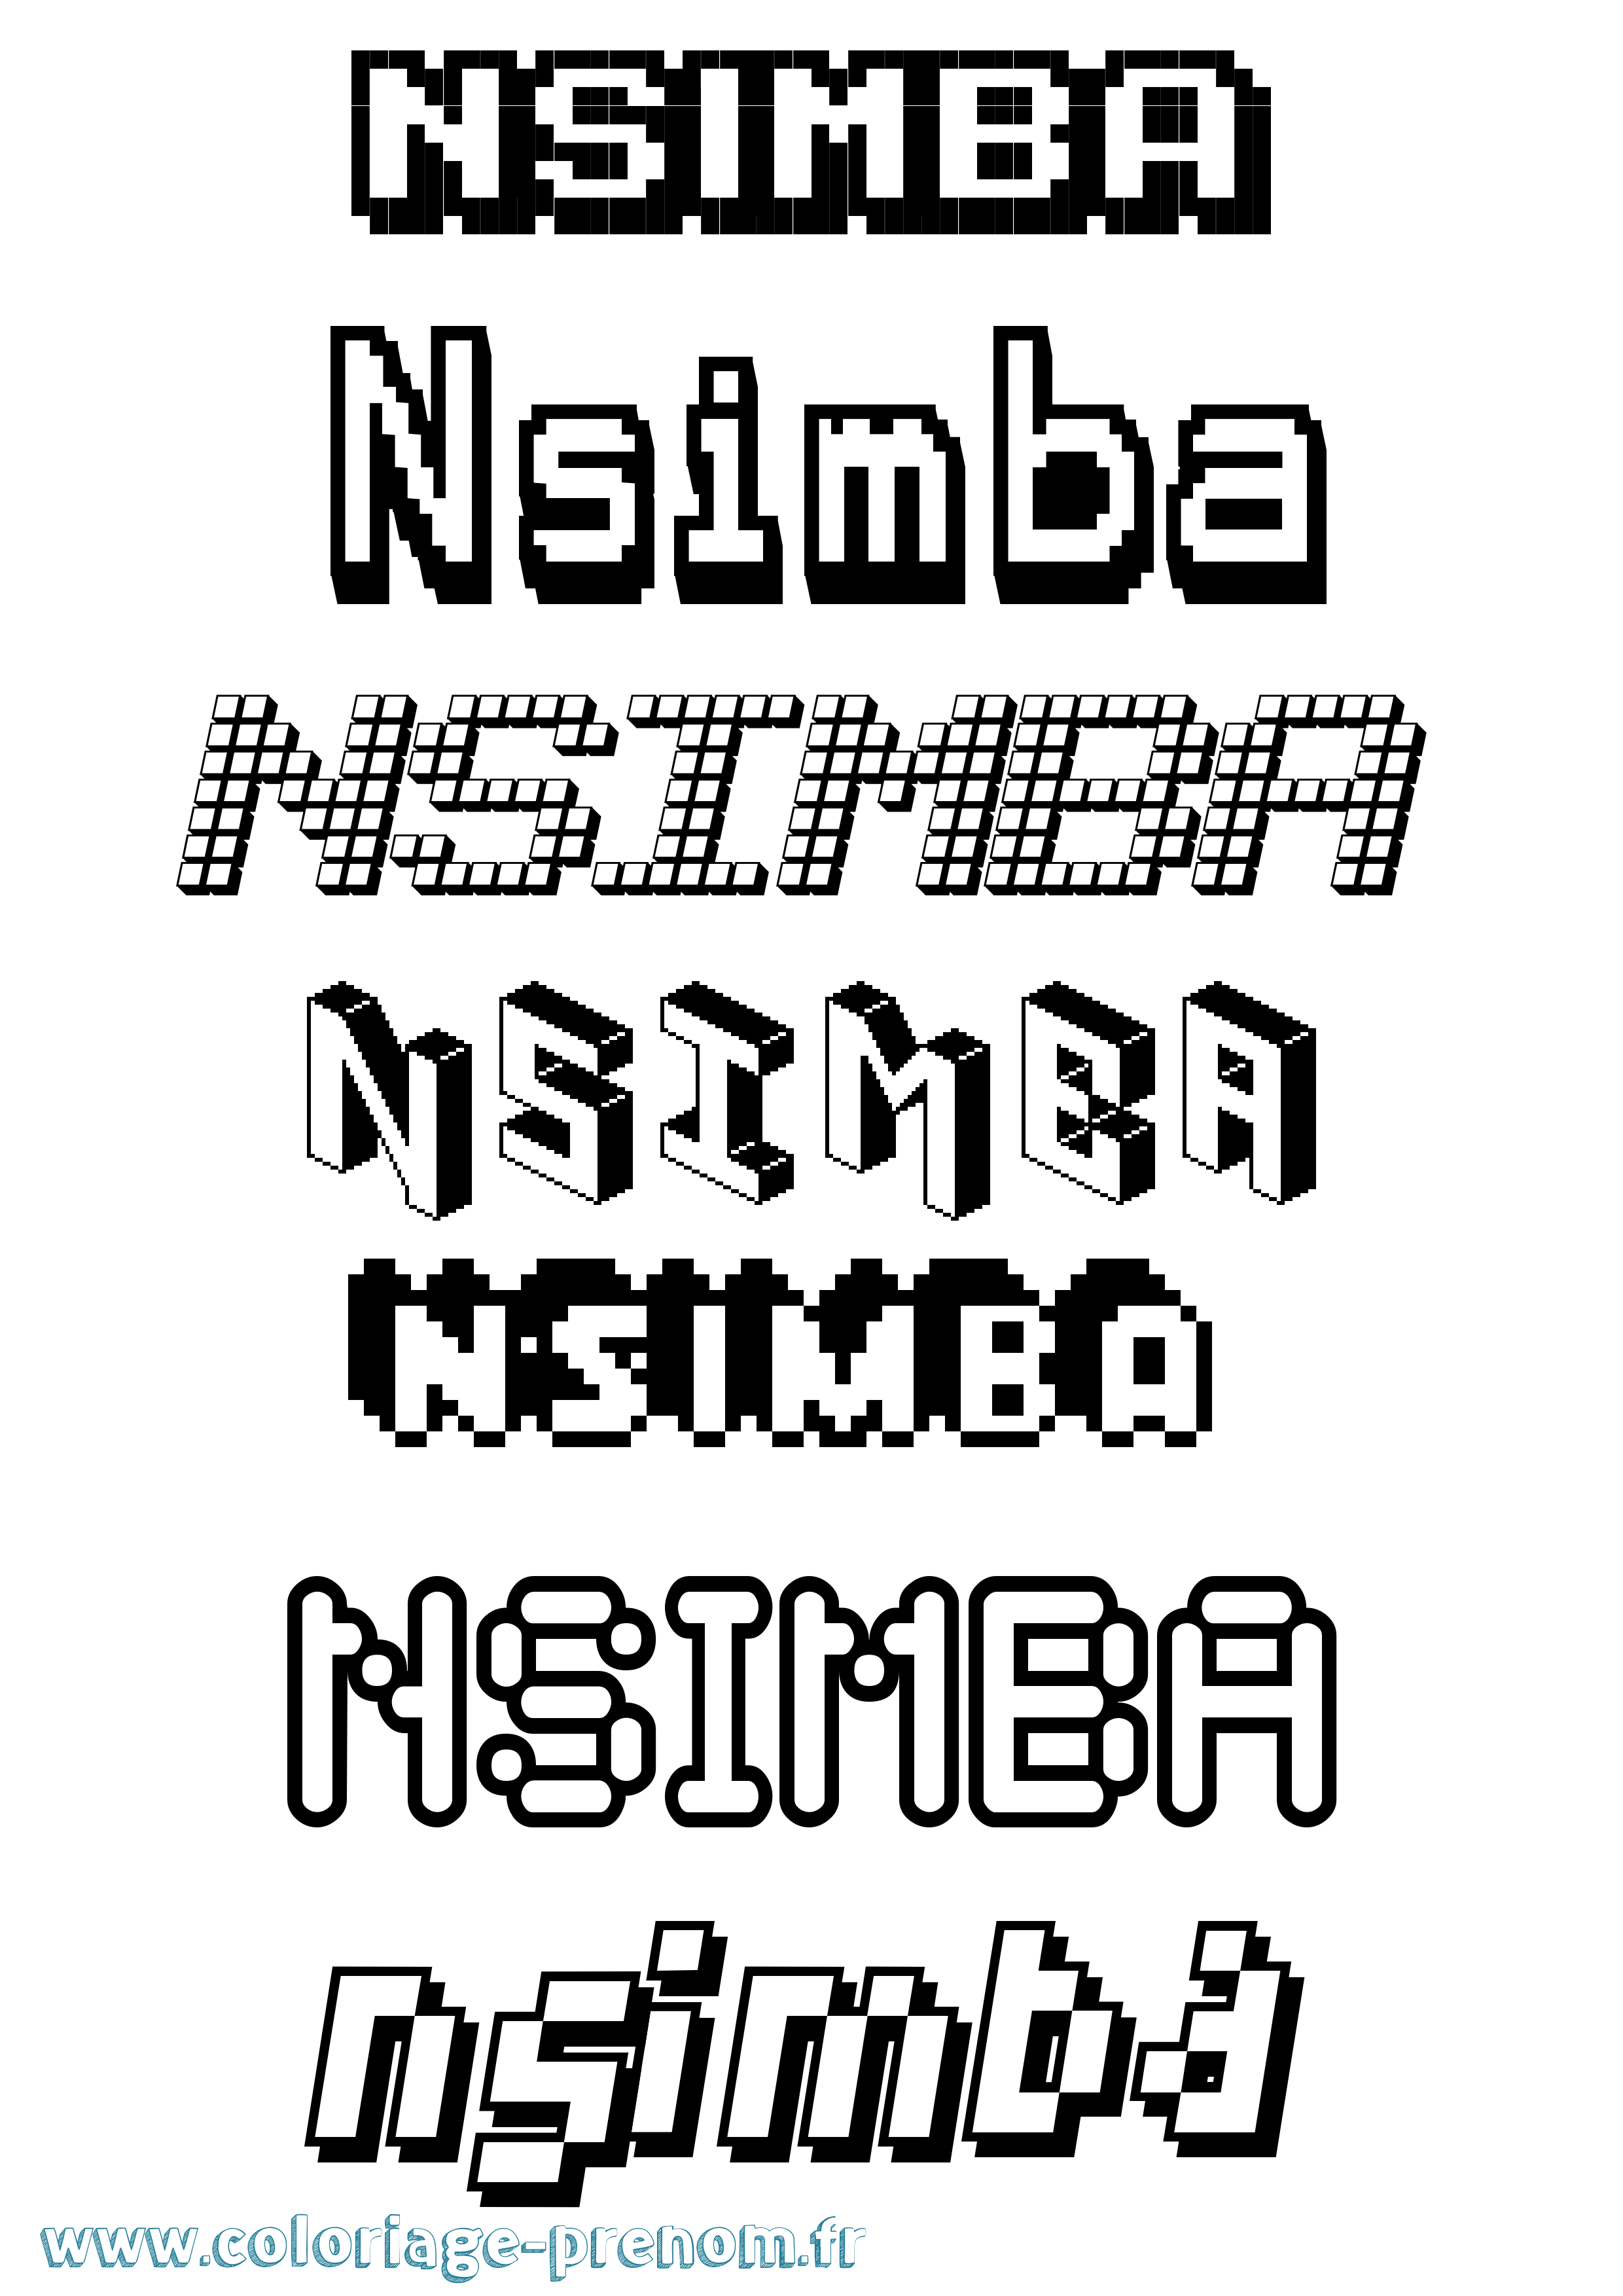 Coloriage prénom Nsimba Pixel